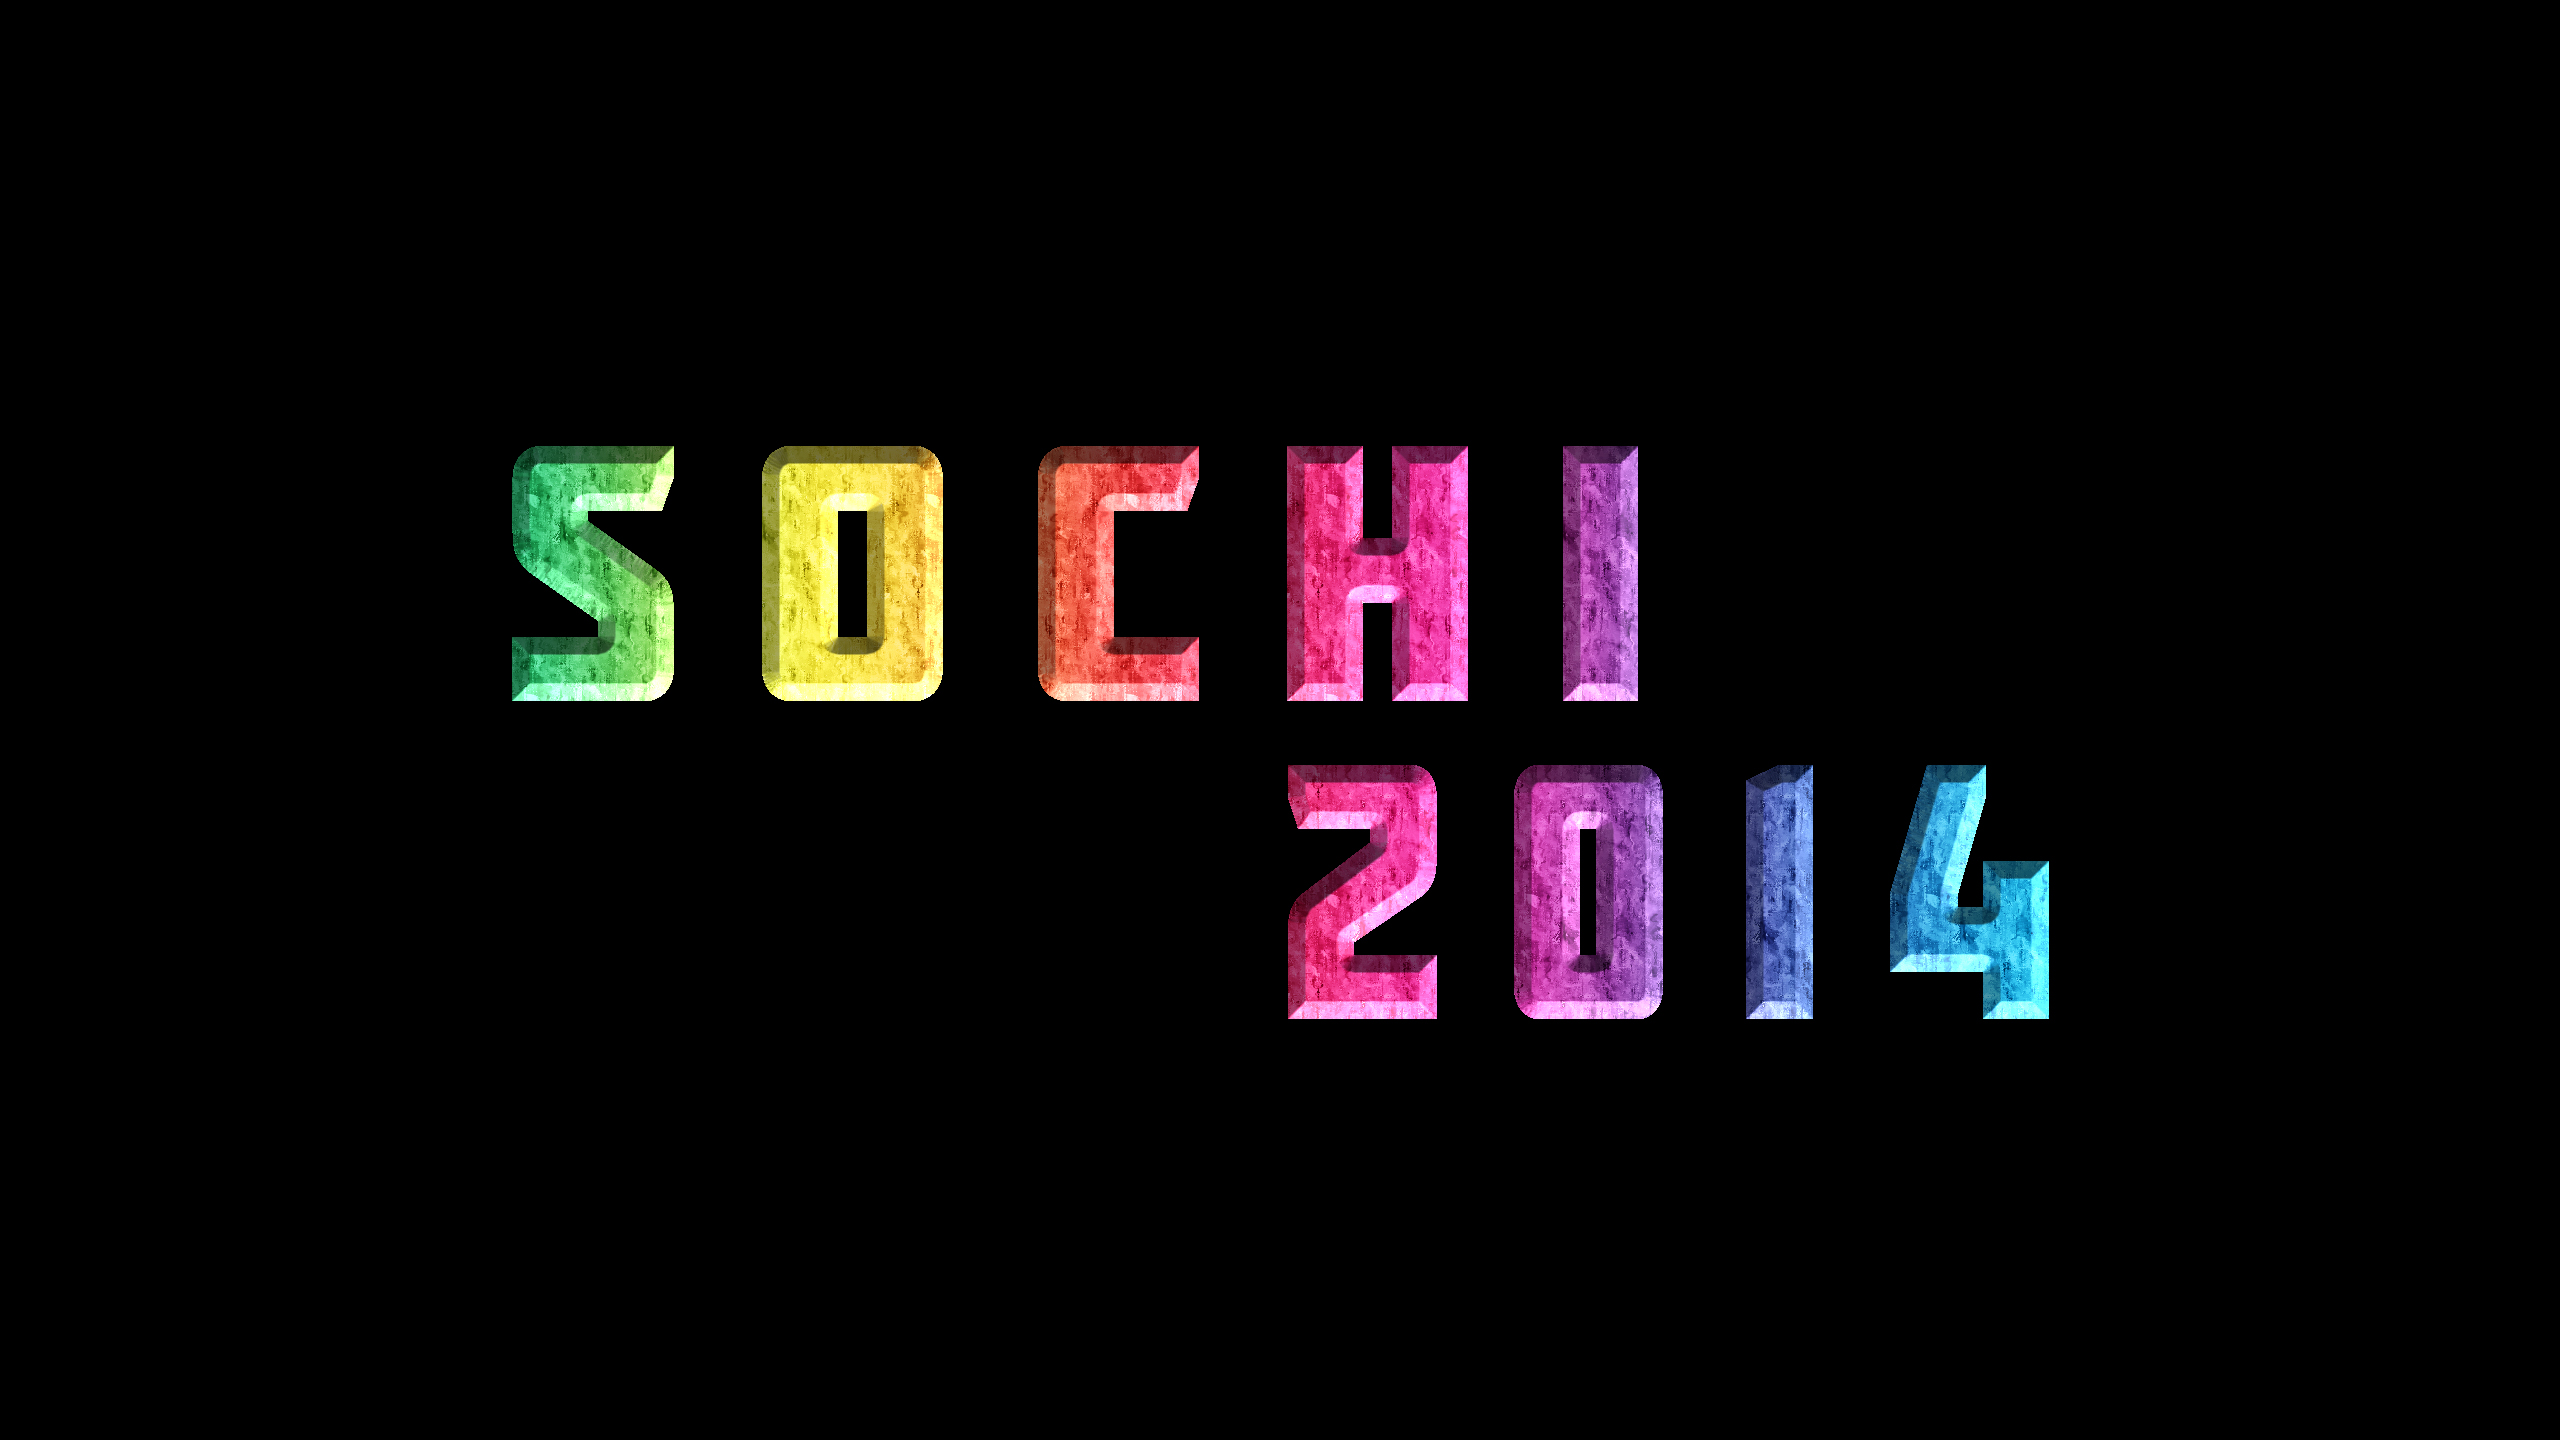 Sports Winter Olimpic Games Sochi 2014 HD Wallpaper | Background Image